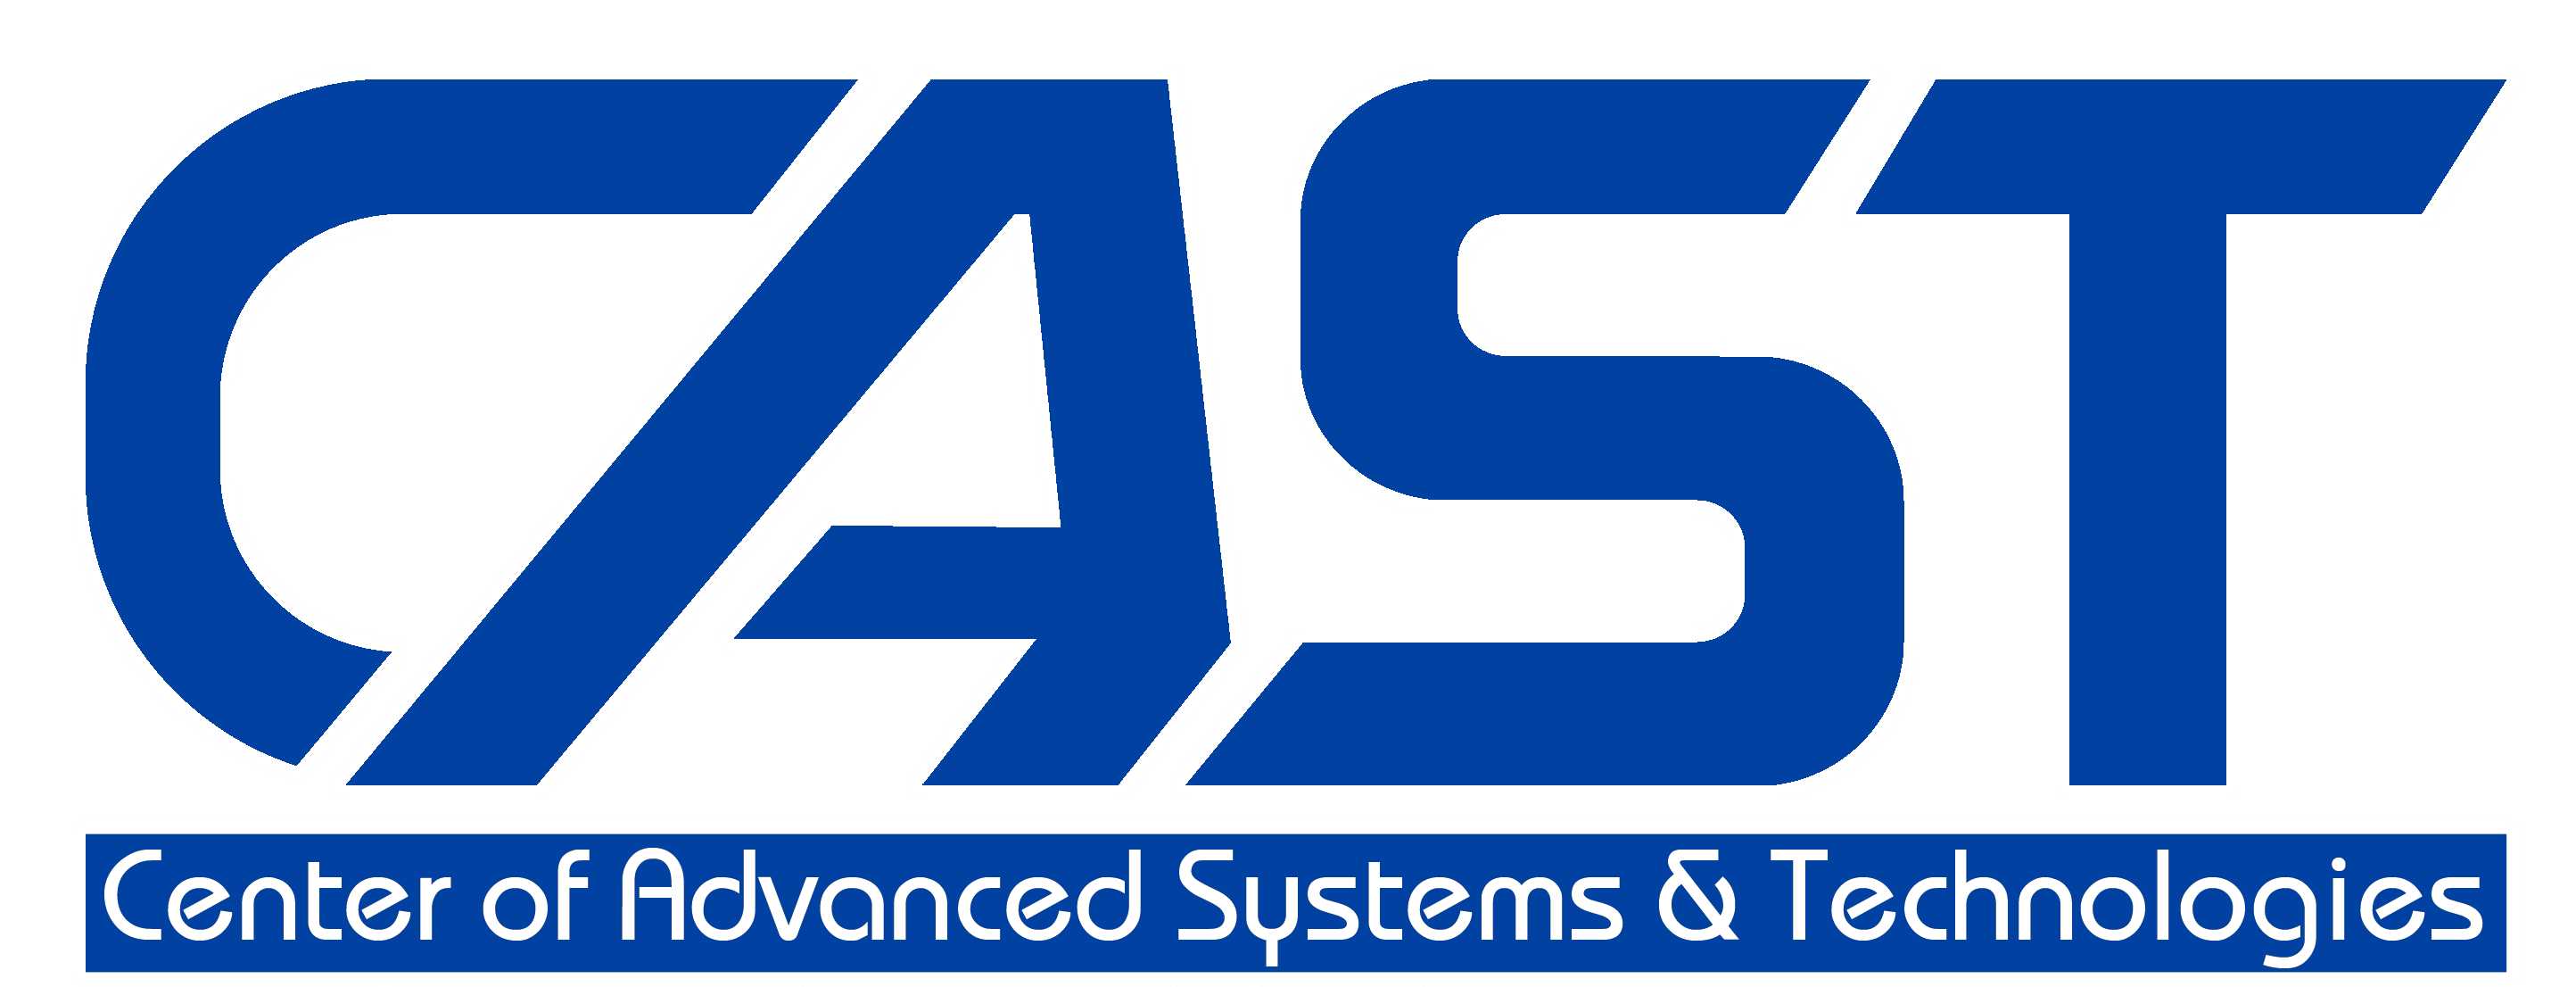 Google Cast Logo - CAST | Center of Advanced Systems & Technologies